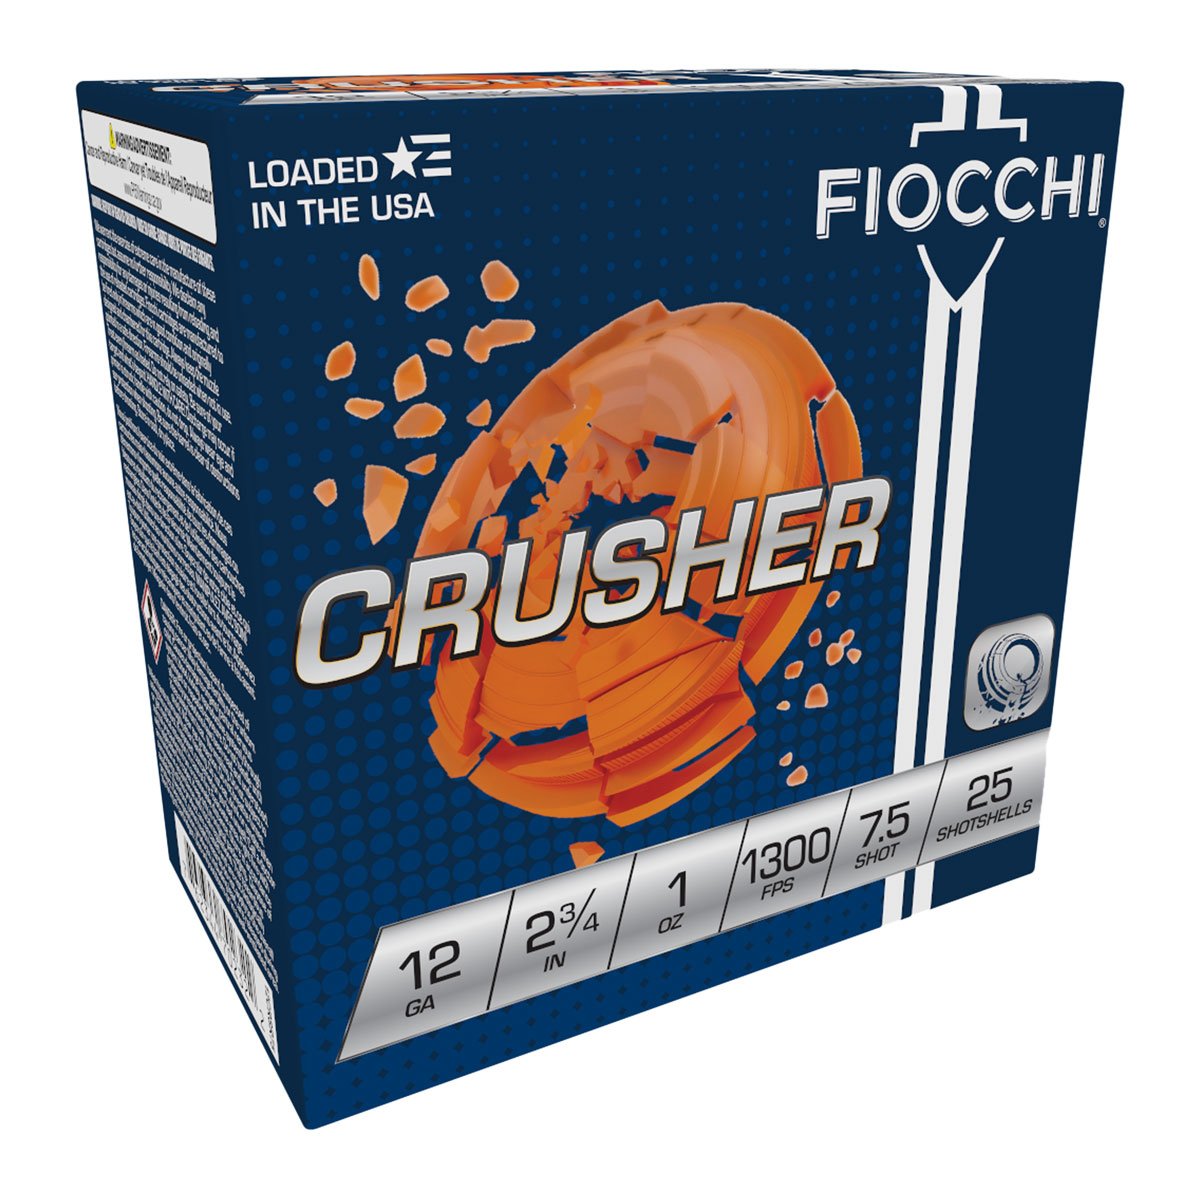 FIOCCHI AMMUNITION - CRUSHER 12 GAUGE AMMO